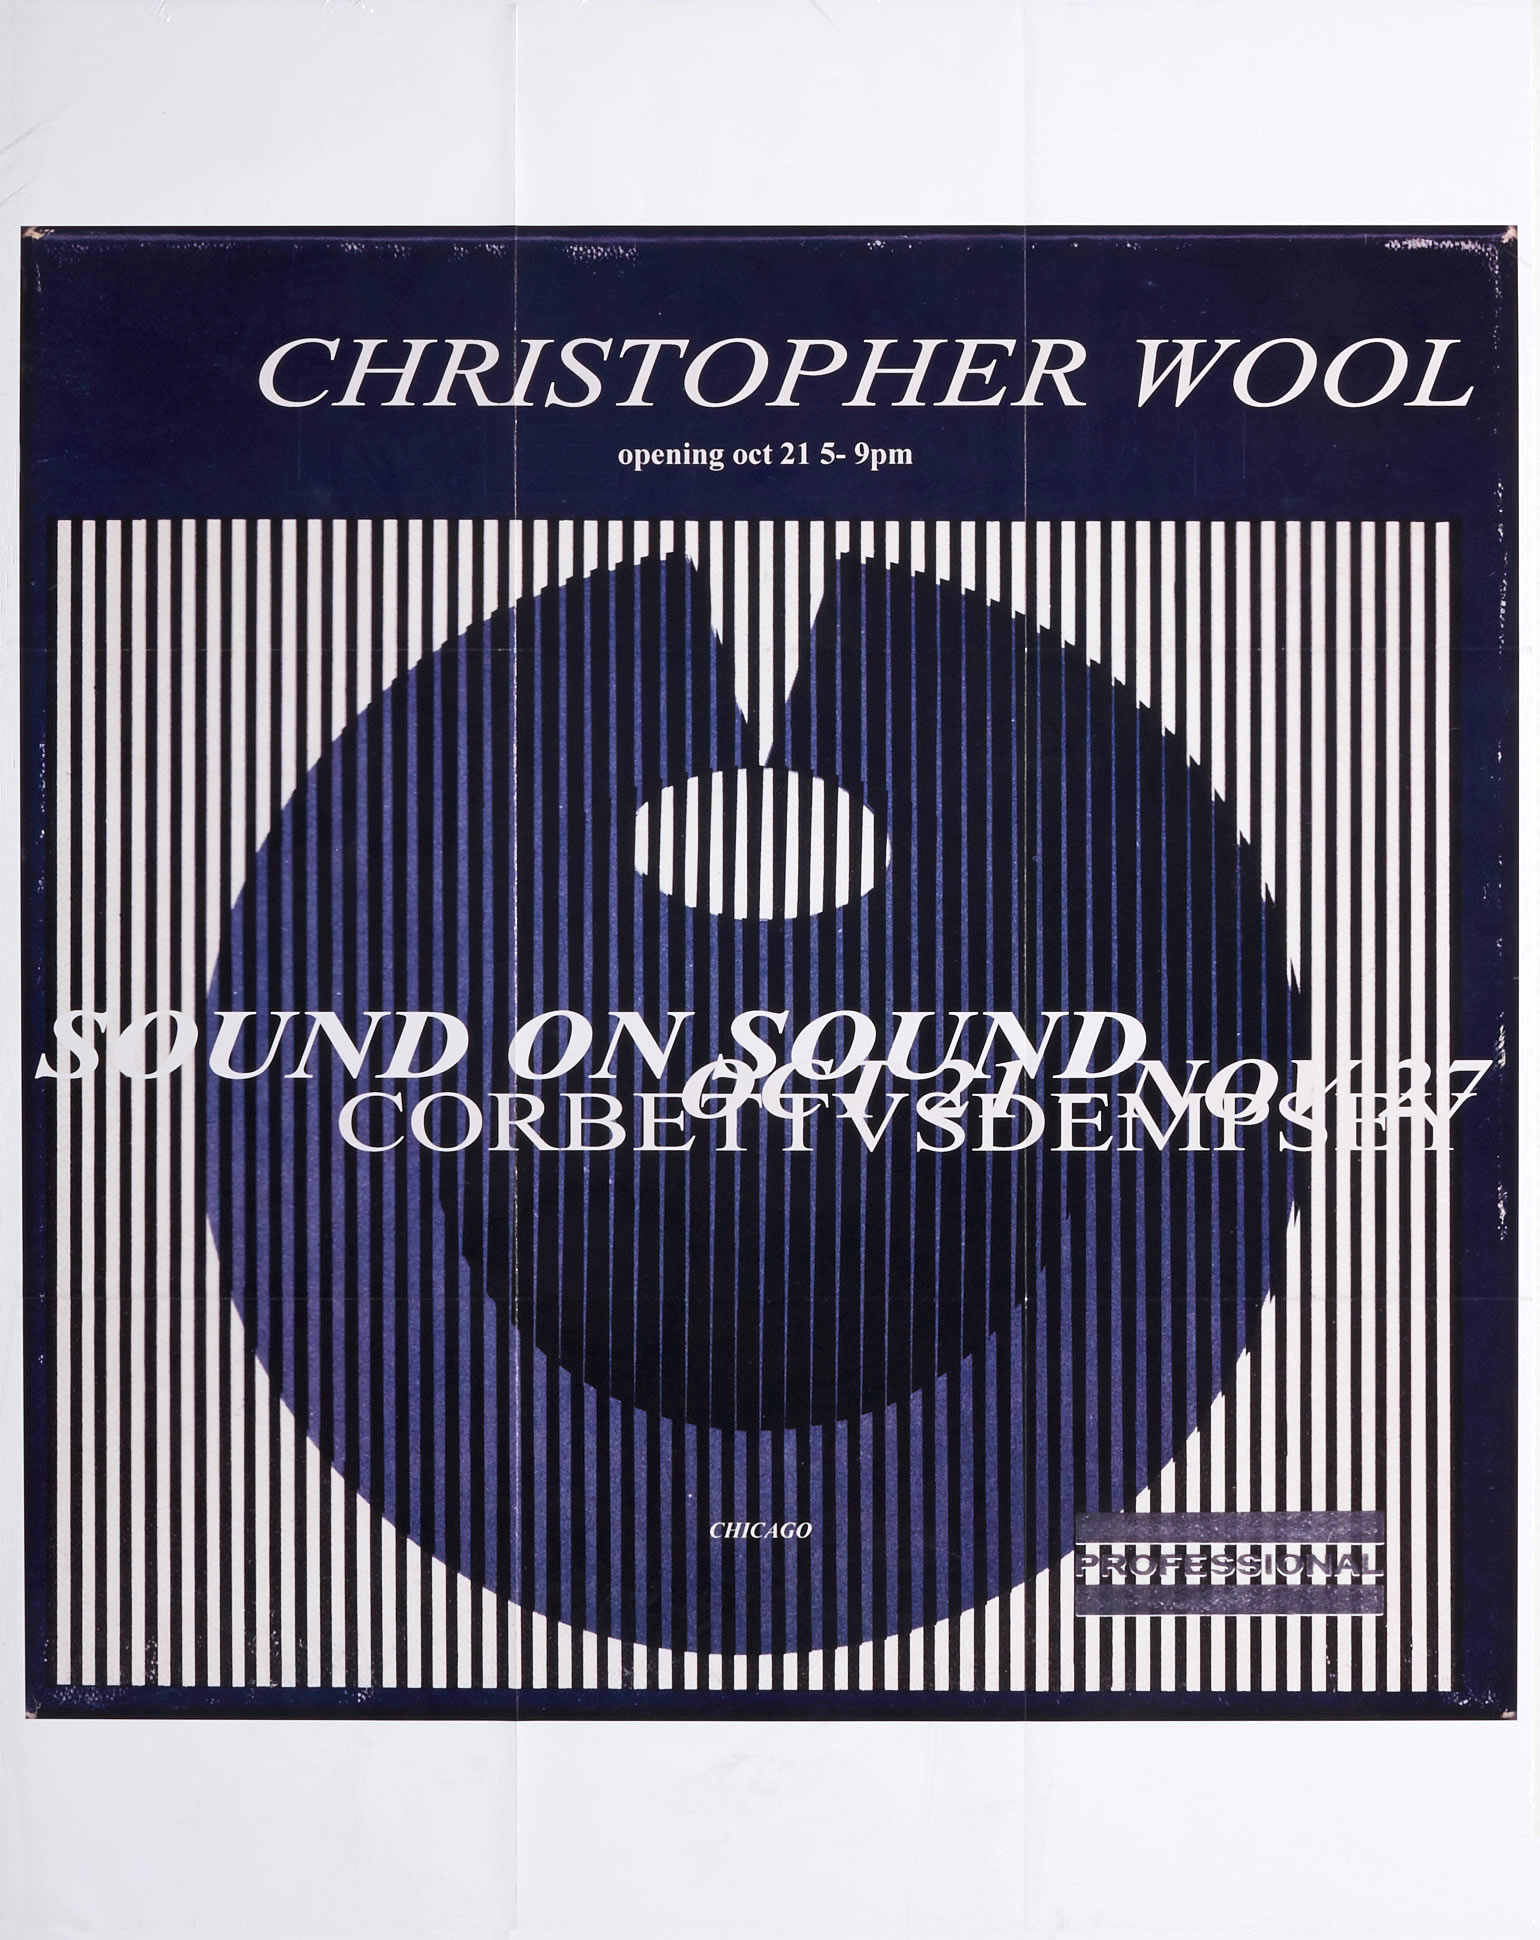 Christopher Wool: Sound on Sound. Corbett vs. Dempsey, Chicago. 2010.